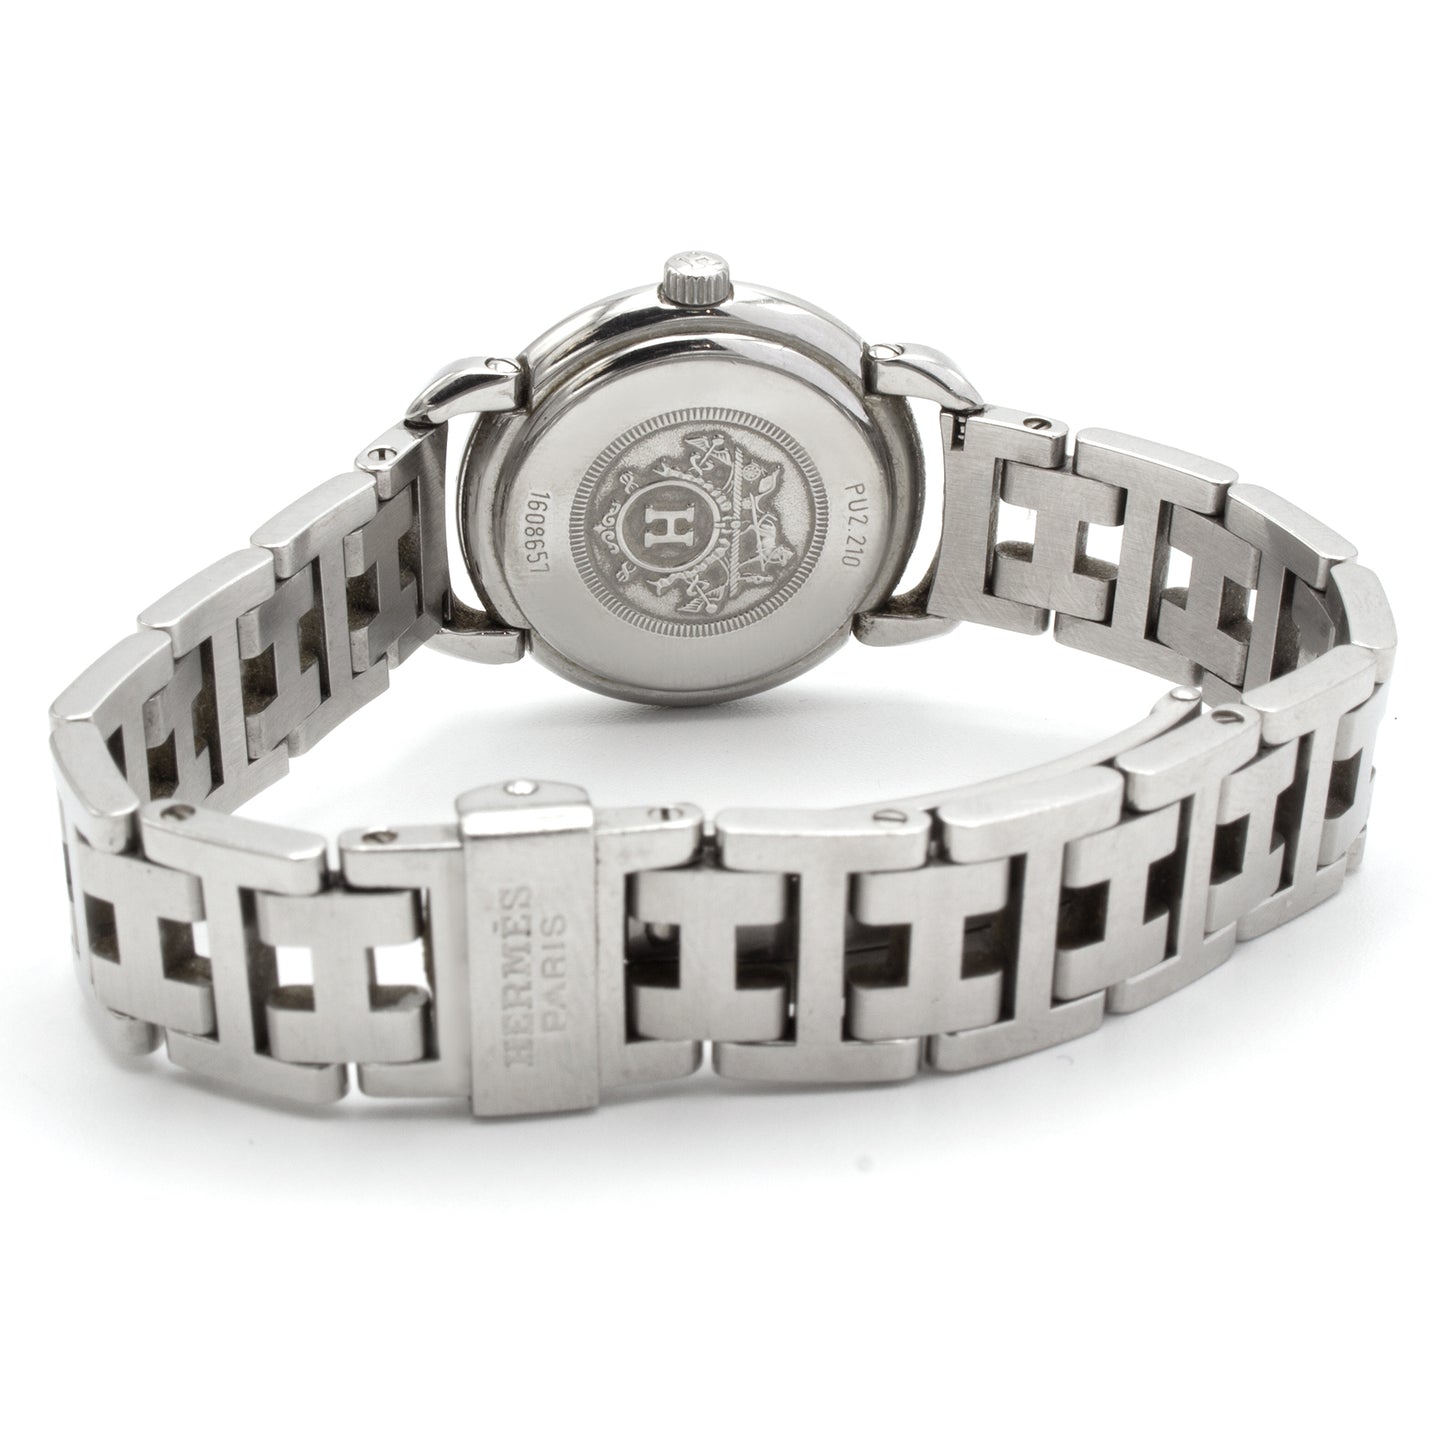 Hermès Pullman PU2.210 watch